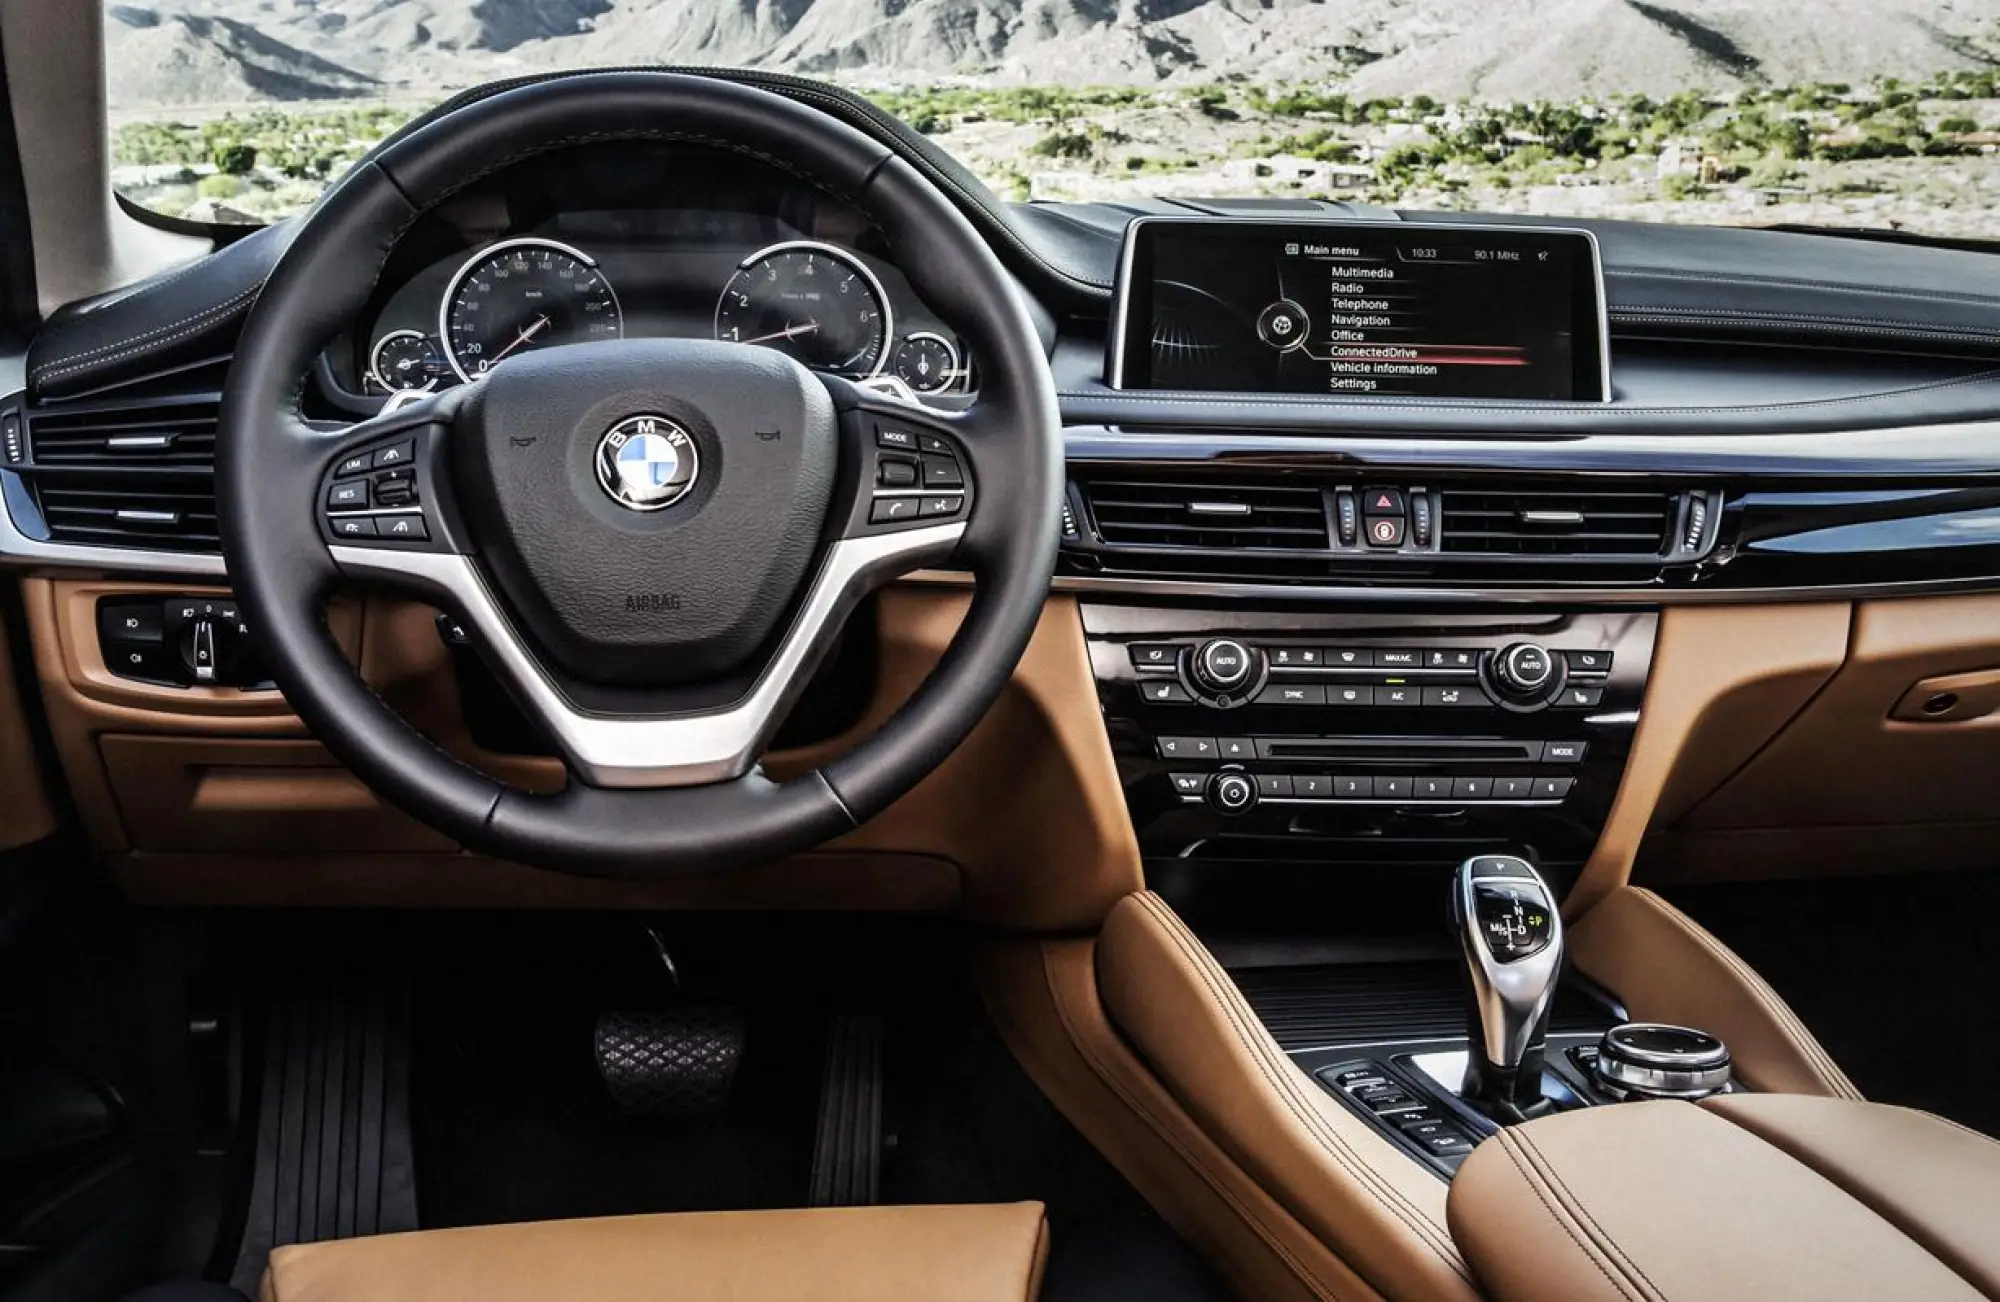 BMW X6 MY 2015 - Foto ufficiali - 37